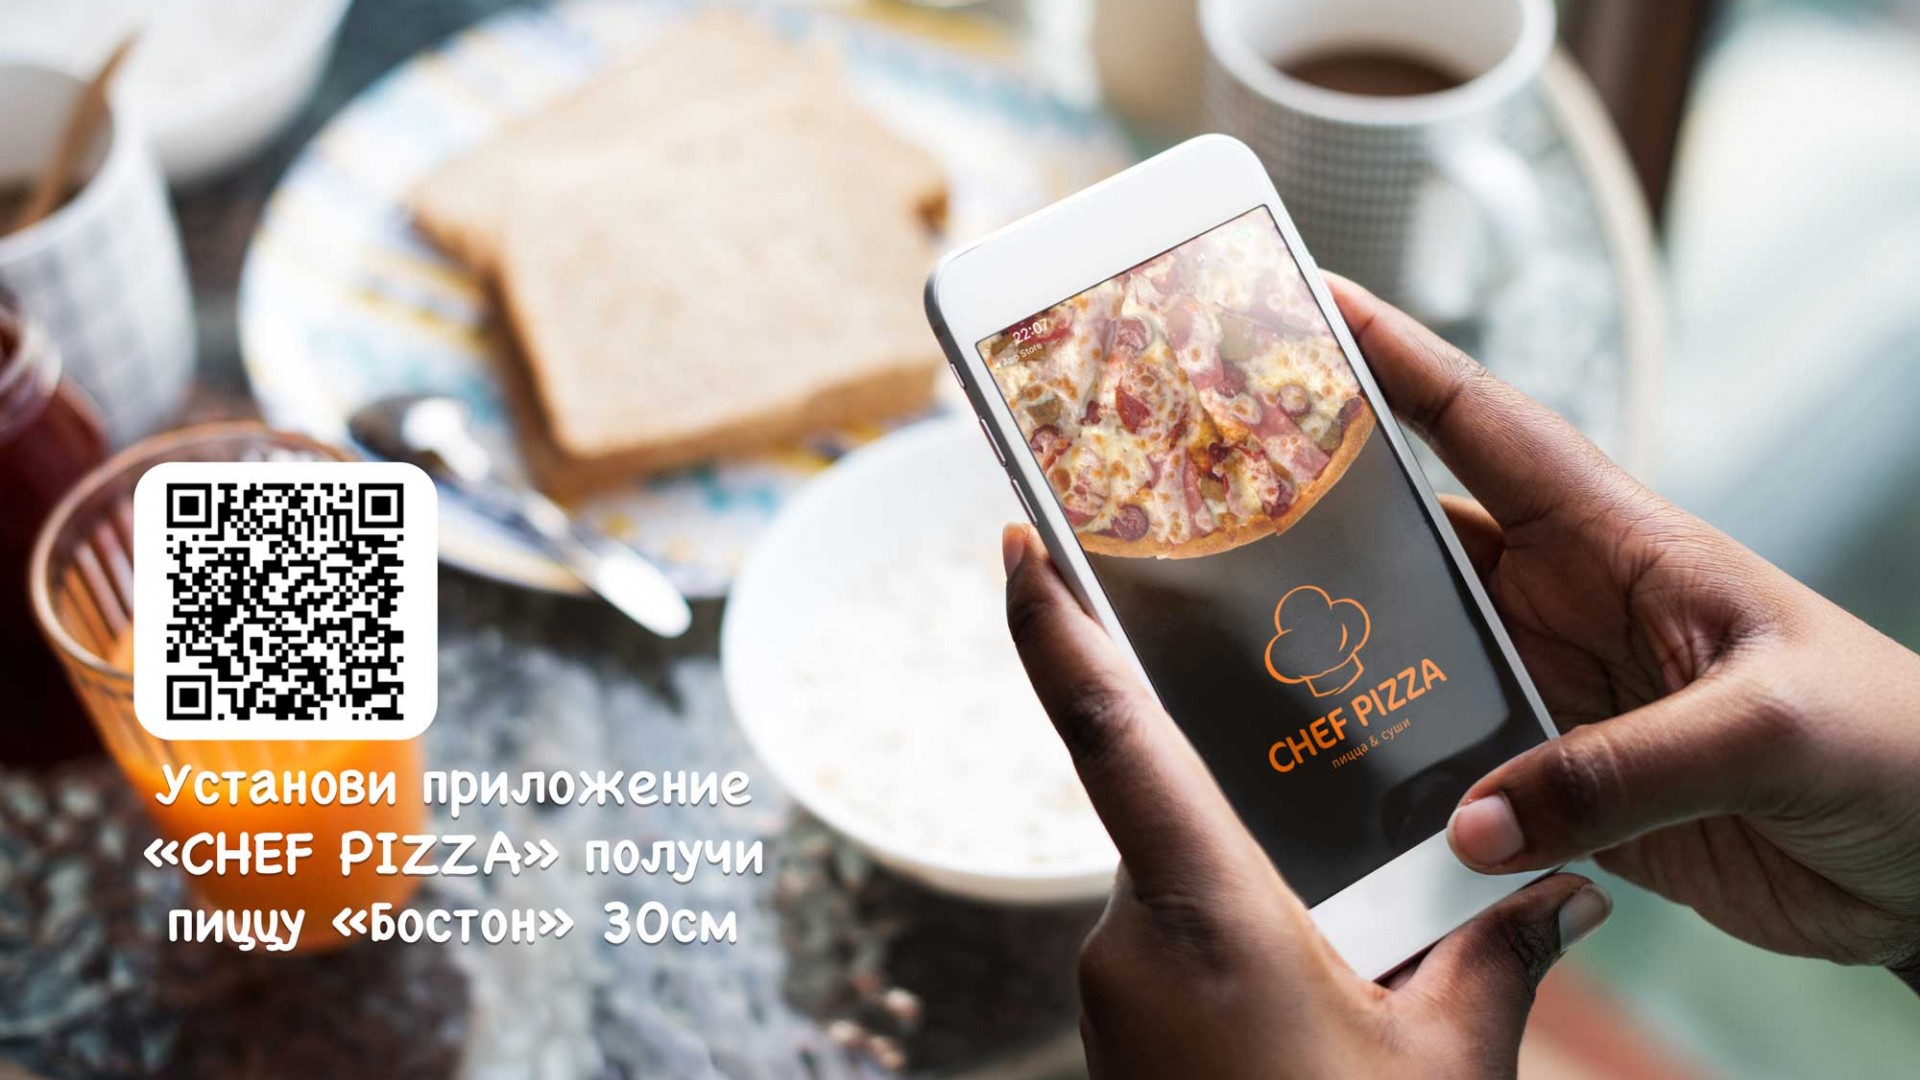 Установи приложение «CHEF PIZZA» получи пиццу «Бостон» 30см